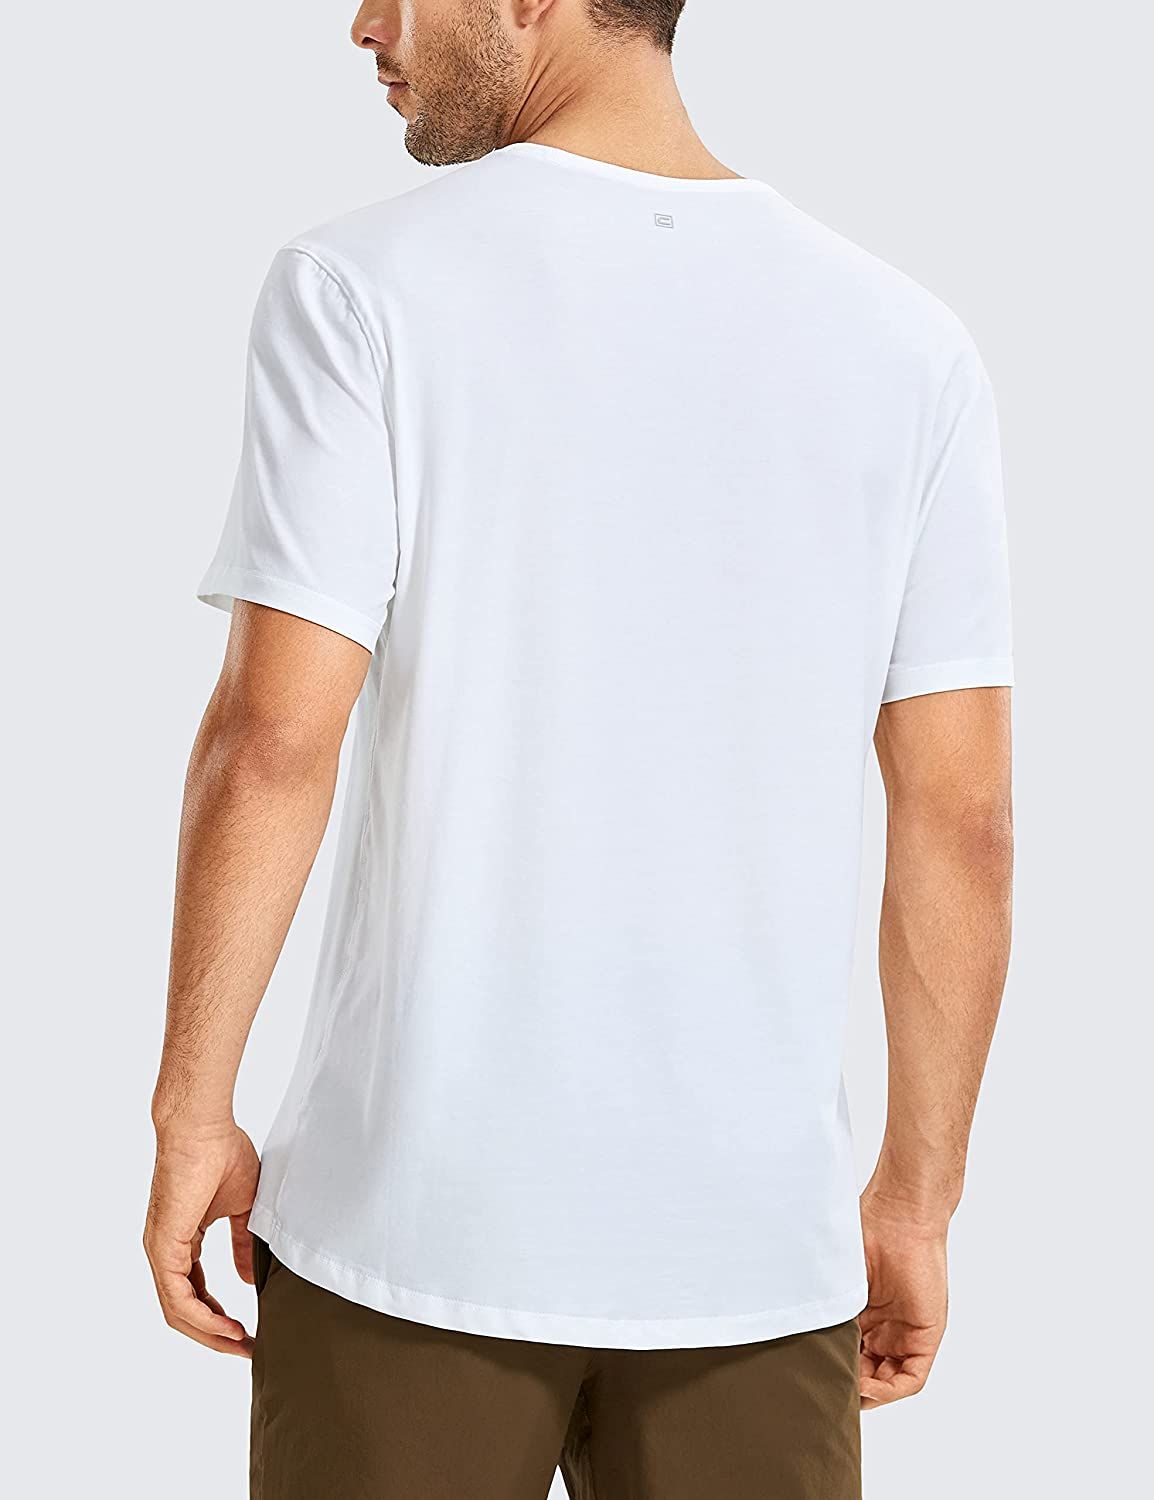 CRZ YOGA Men's Lightweight Pima Cotton Short Sleeve Athletic T-Shirts Workout Quick Dry Loose Fit... | Amazon (US)